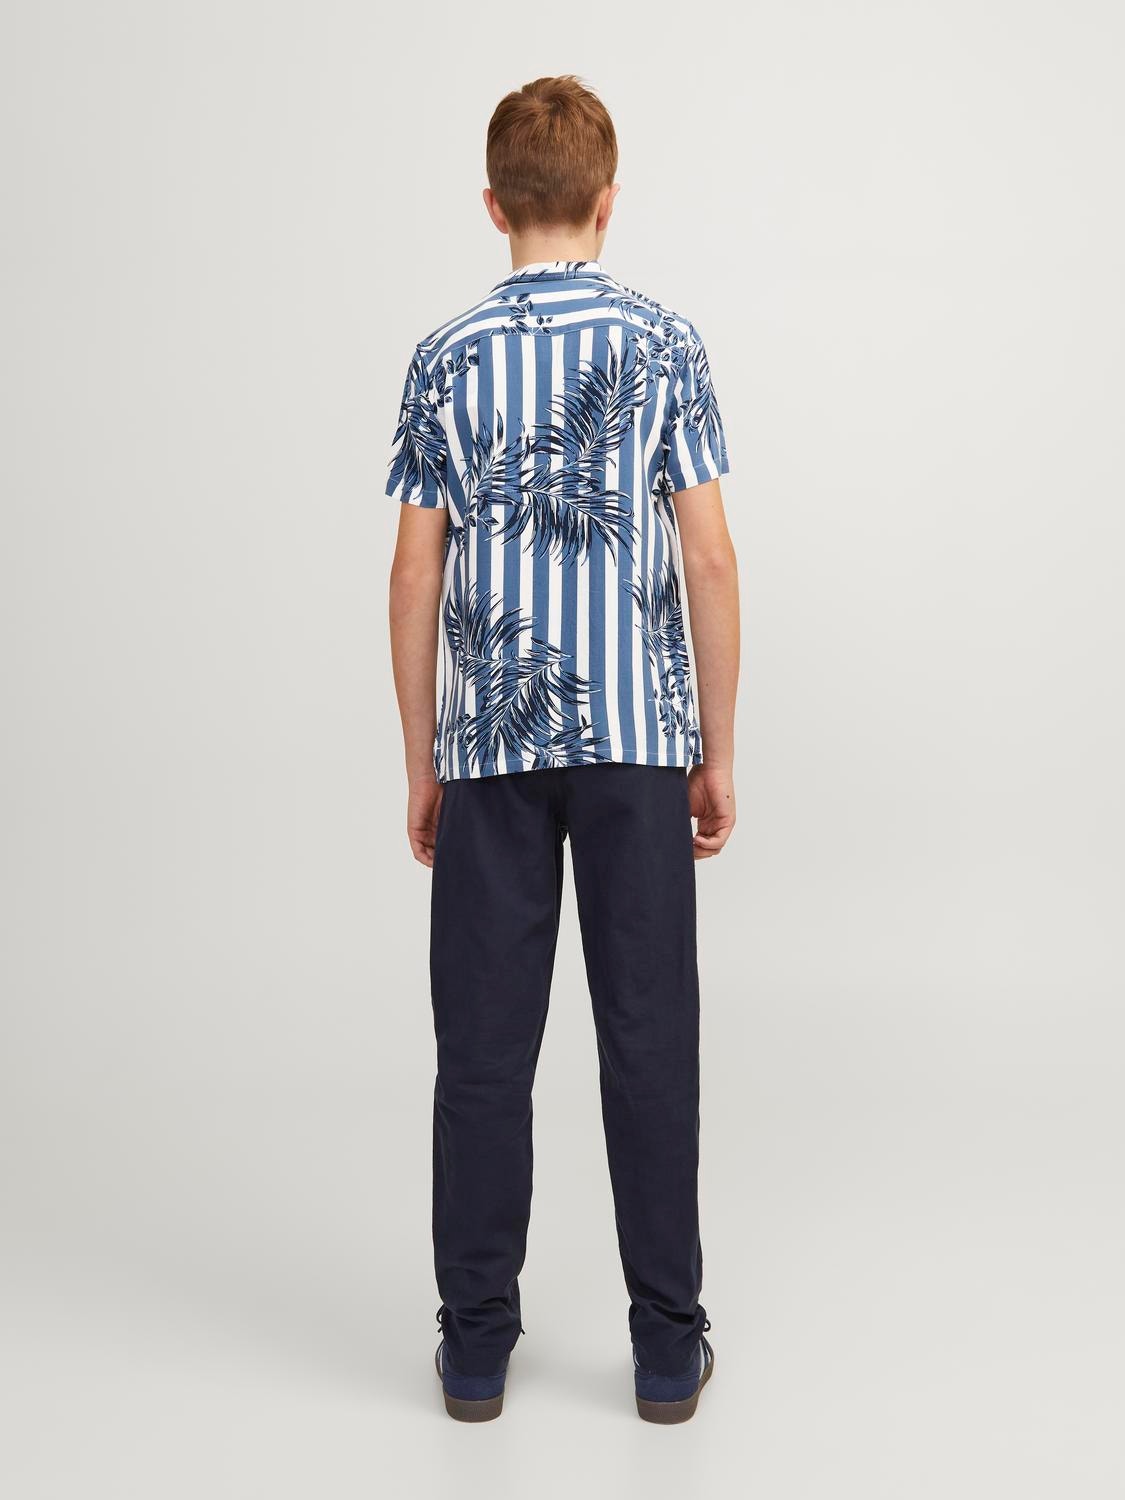 Jack & Jones Shirt For boys -Ensign Blue - 12248941